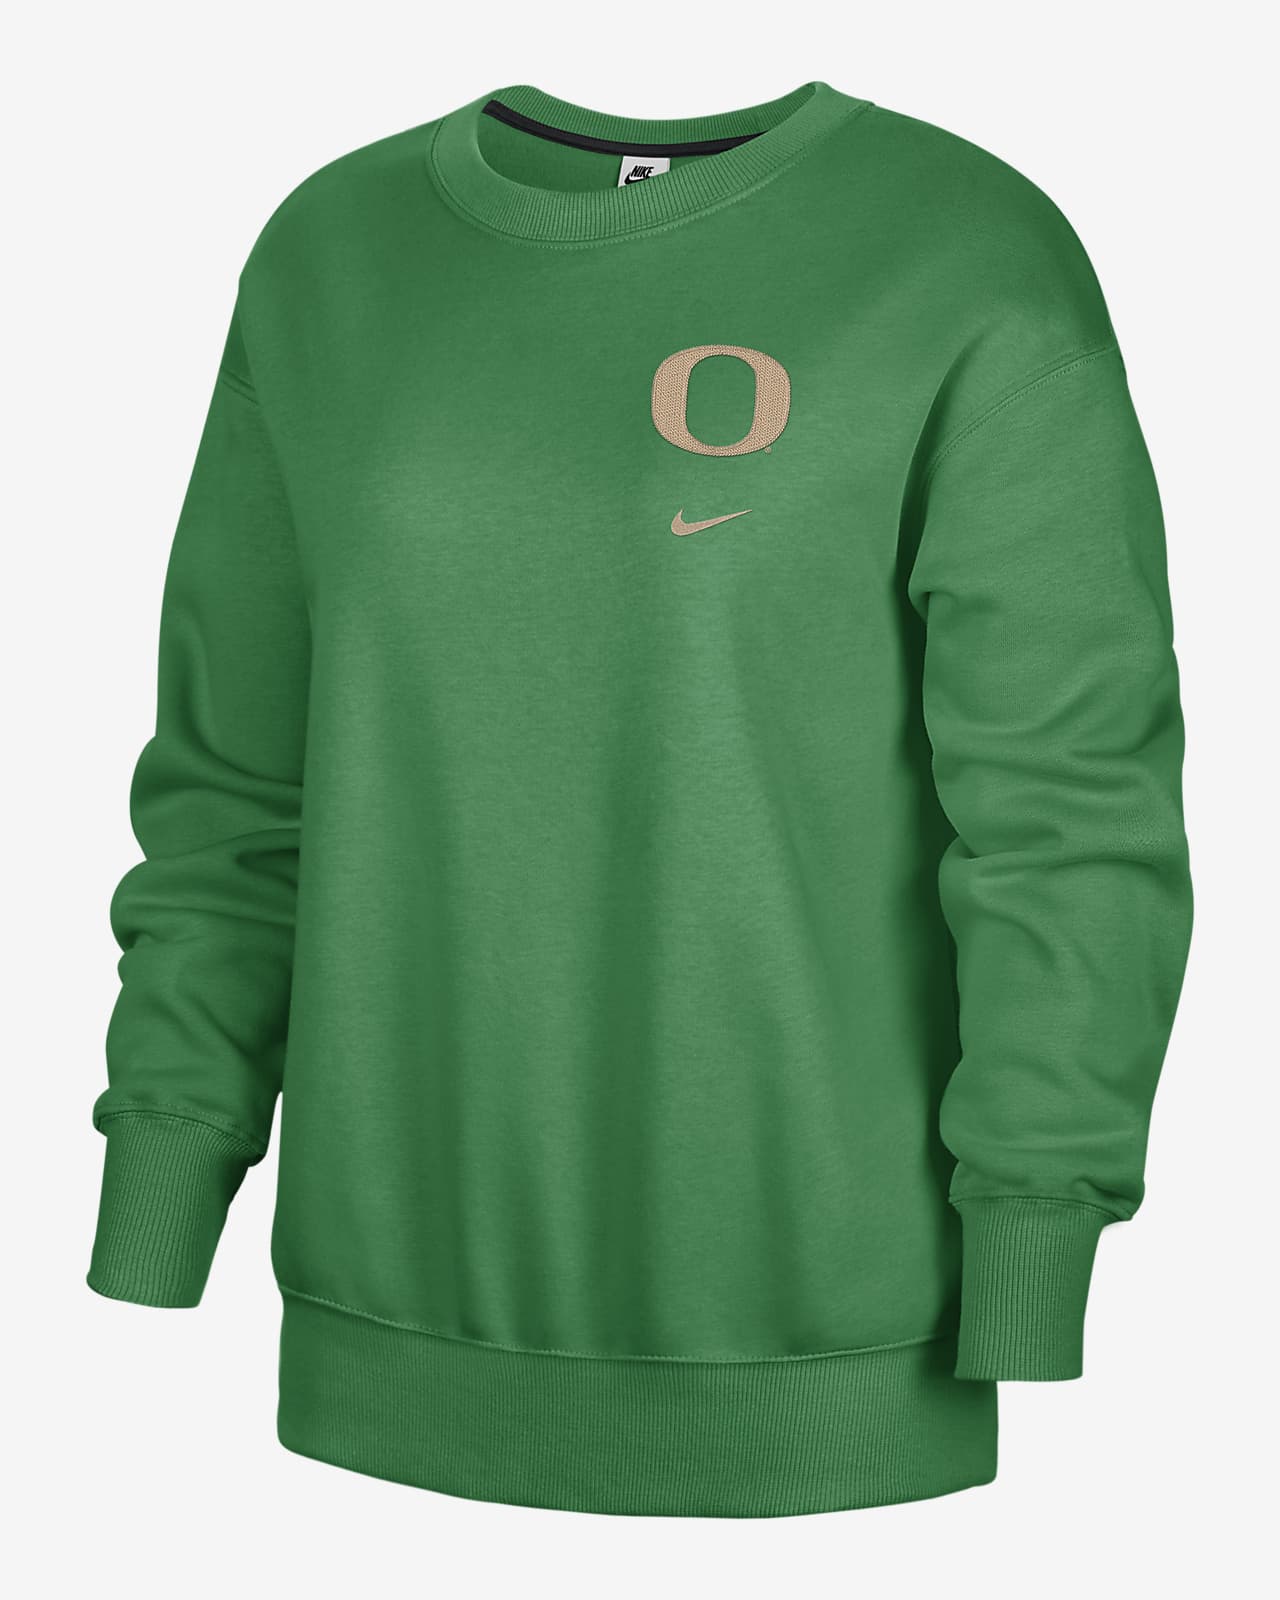 Oregon Club Fleece Women's Nike College Oversized Fit Crew-Neck Sweatshirt